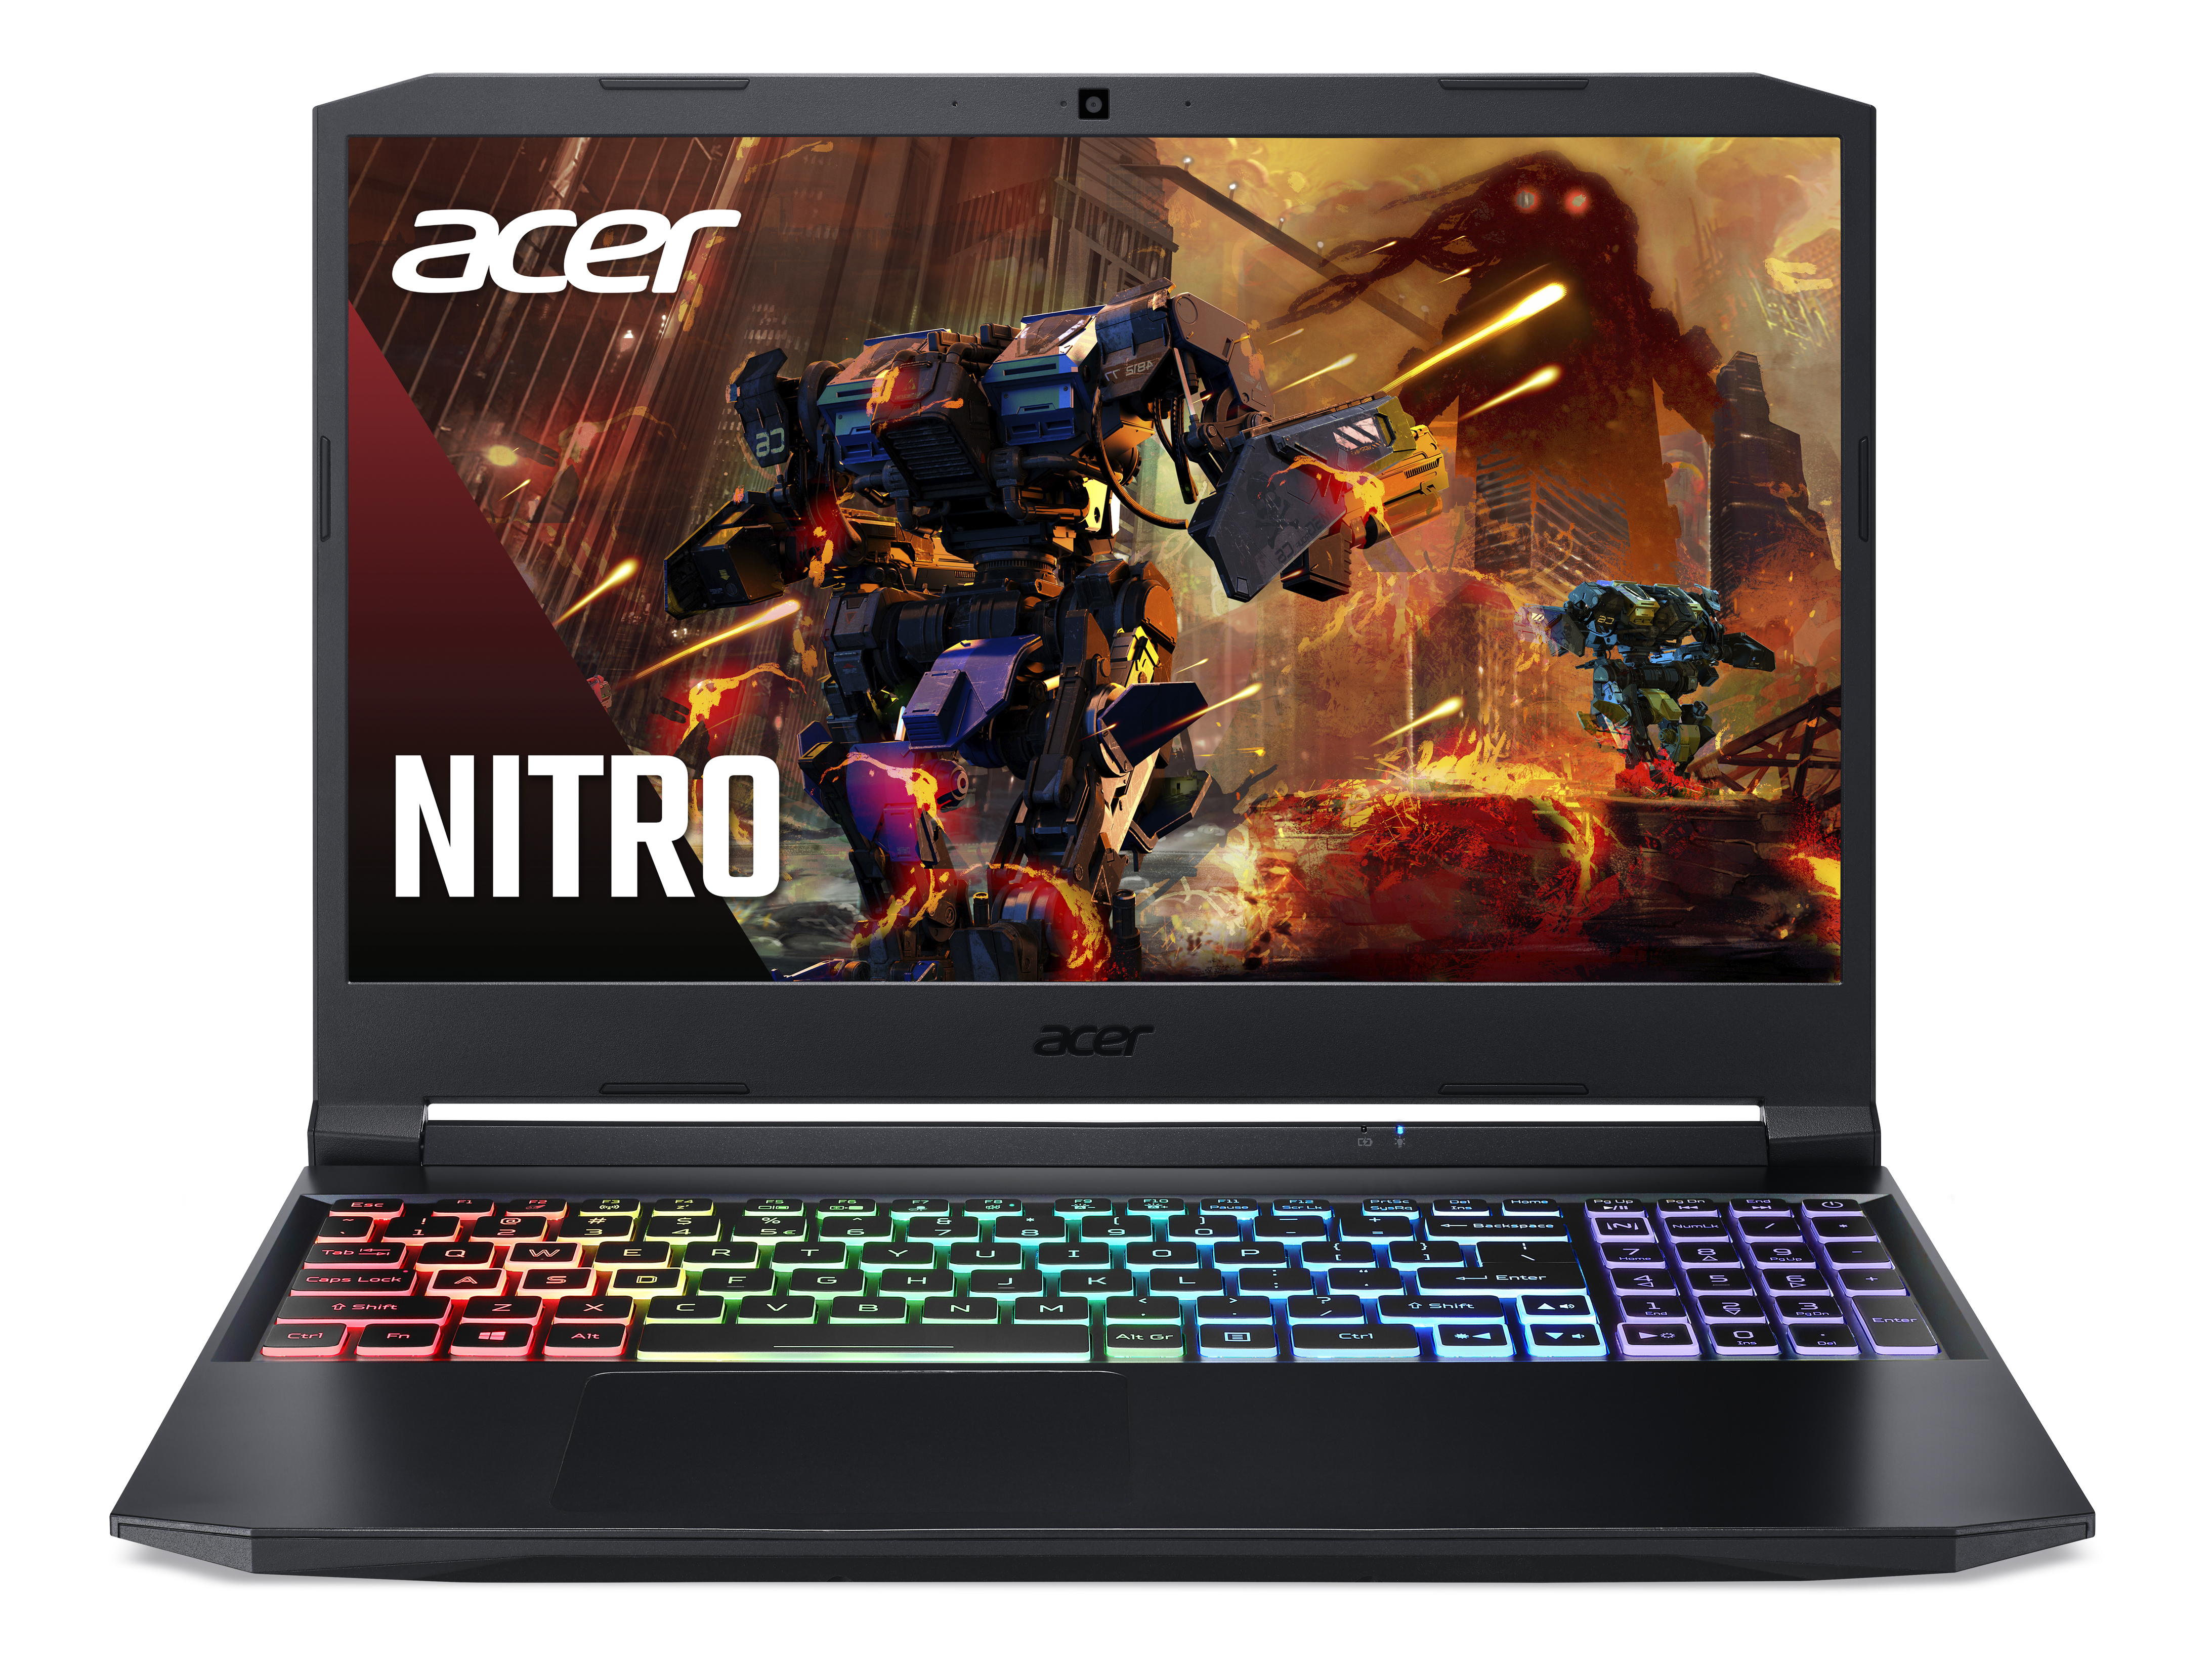 Ноутбук acer nitro отзывы. Acer Nitro an515. Асер нитро 5 an515. Игровой ноутбук Асер нитро 5. Ноутбук Acer Nitro 5 an515.